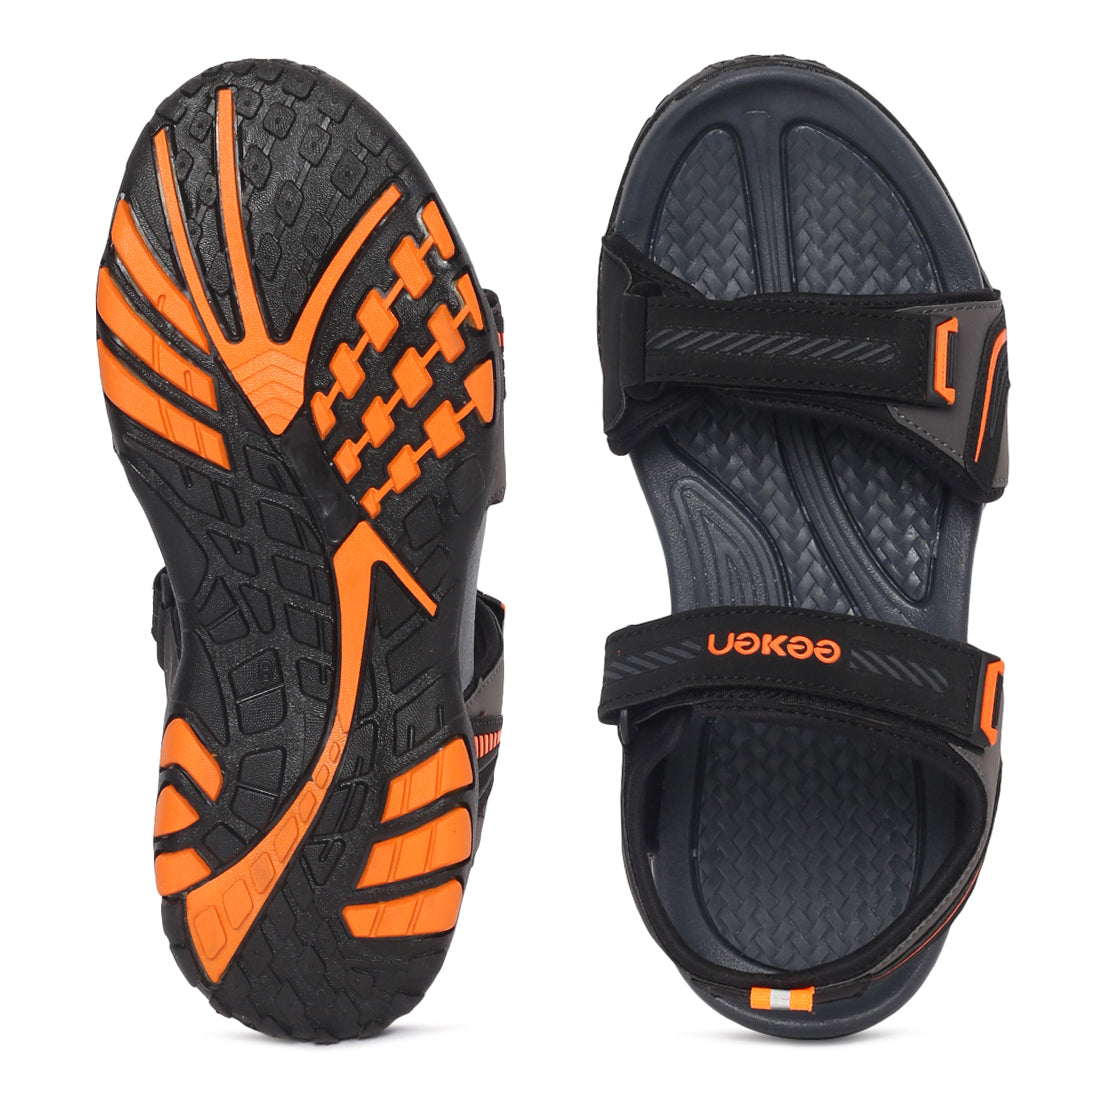 Eeken ESDGO4507S Black Stylish Lightweight Dailywear Sports Sandals For Men